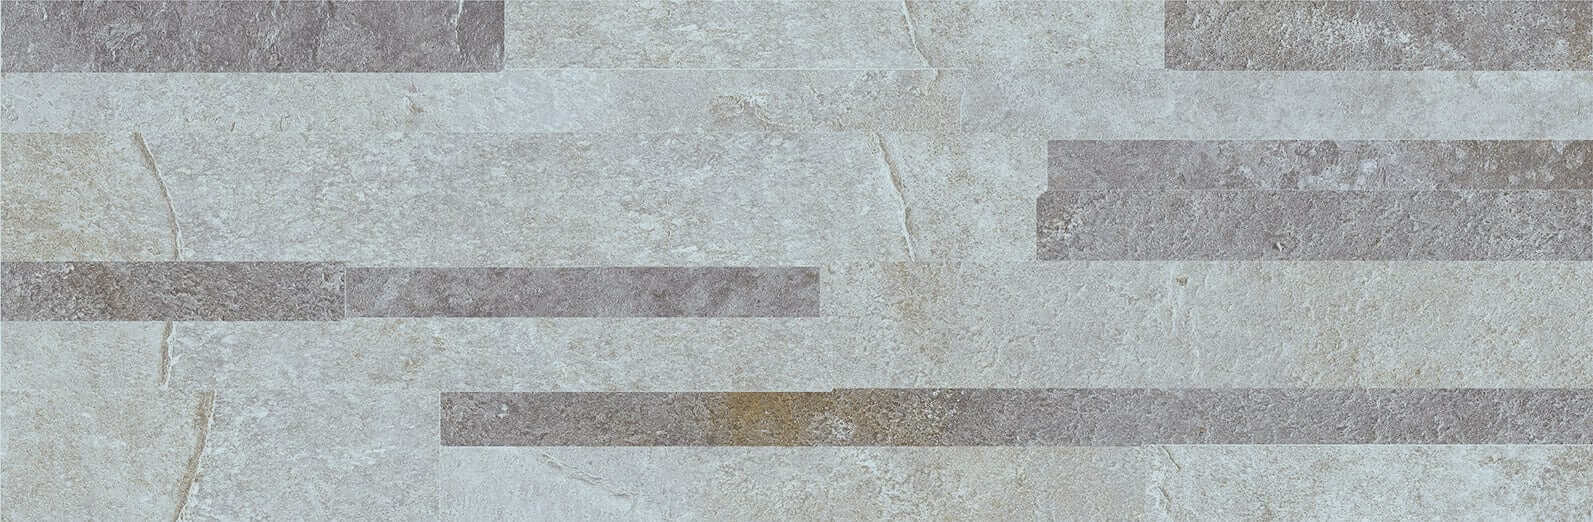 Tiles  -  Atrium Eos Gris 17X52cm  -  60000183